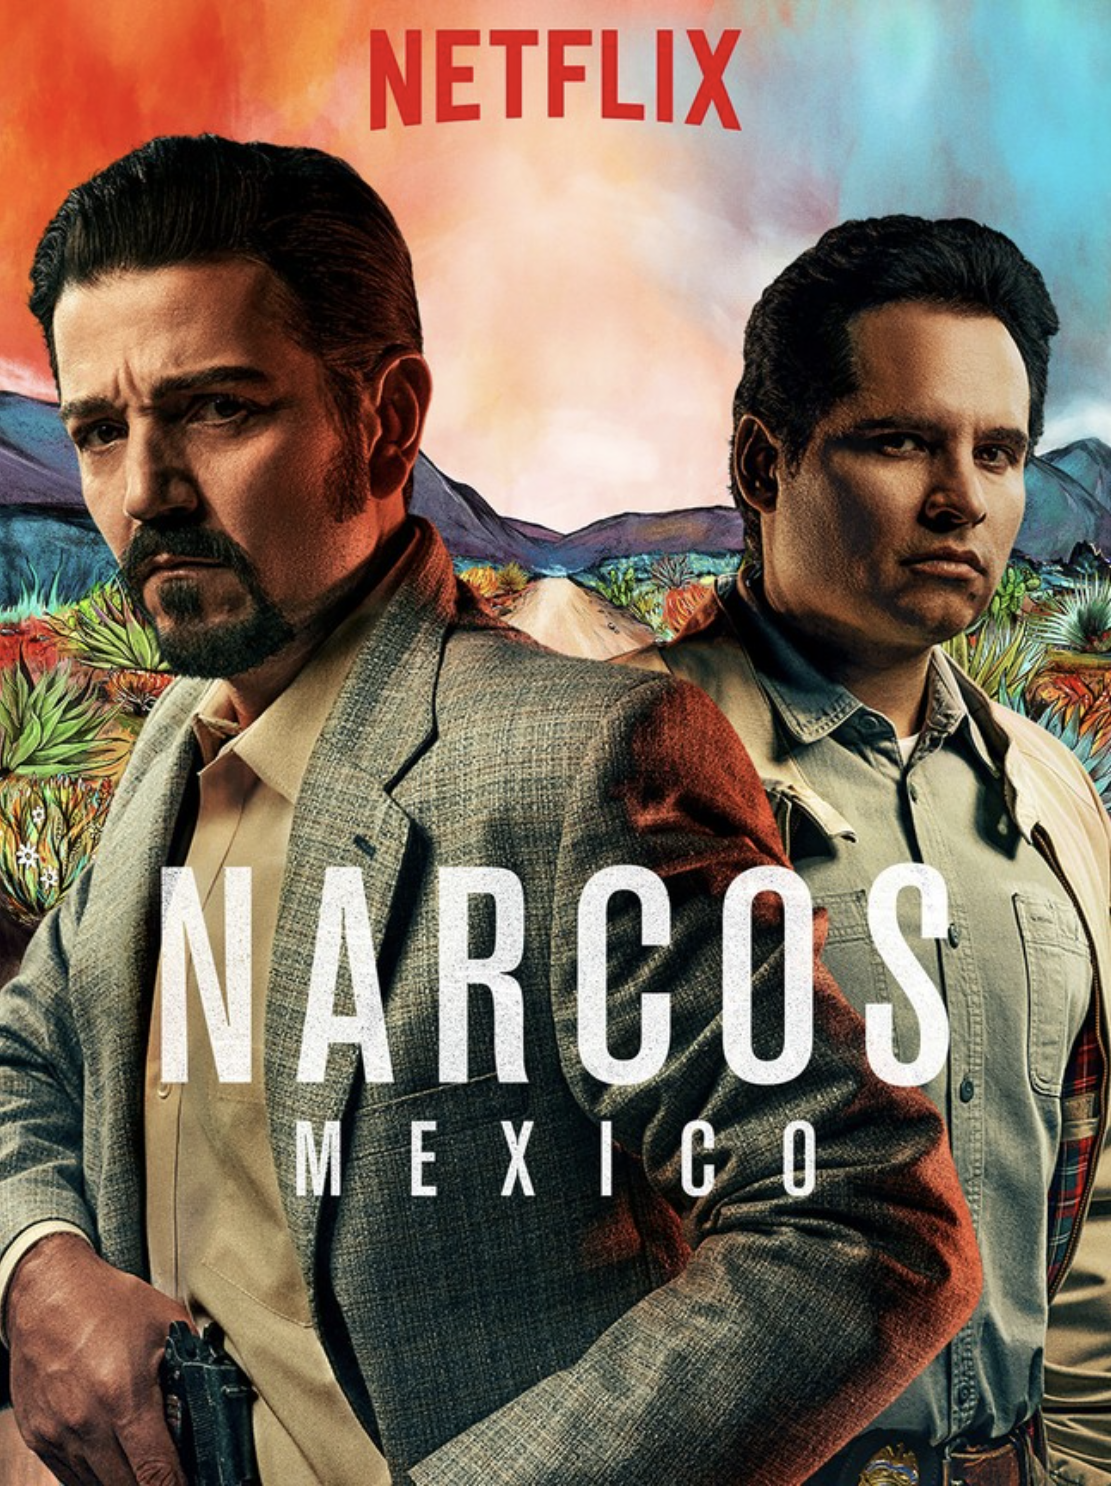 Narcos Mexico.png